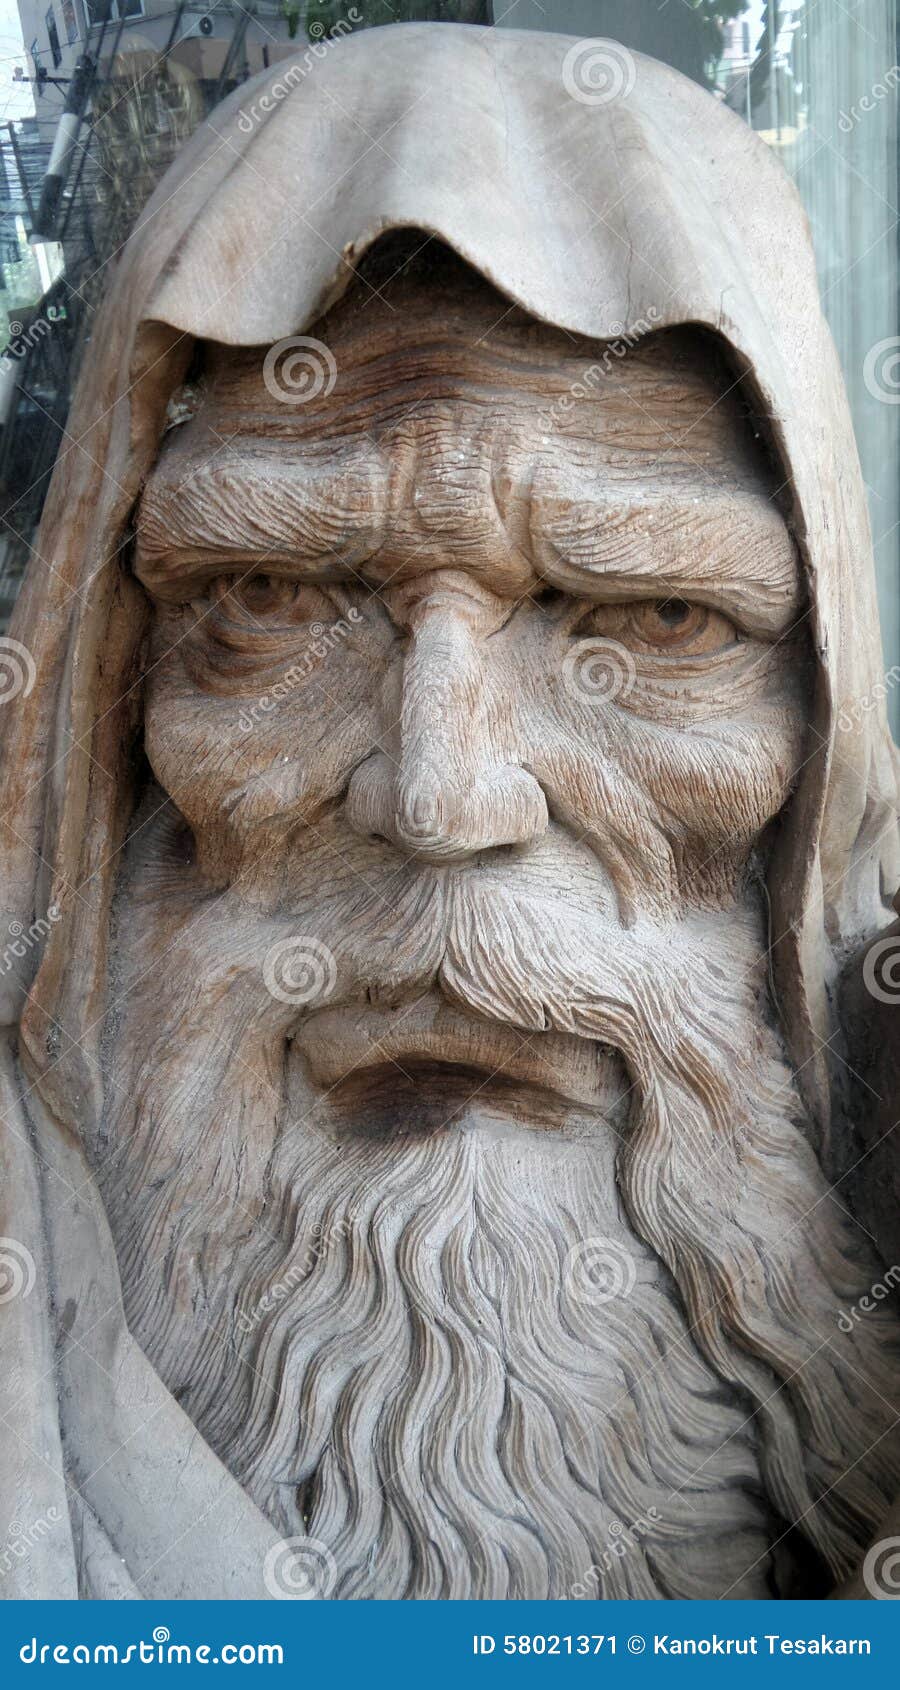 old-man-long-beard-wood-carving-close-up-white-carve-58021371.jpg